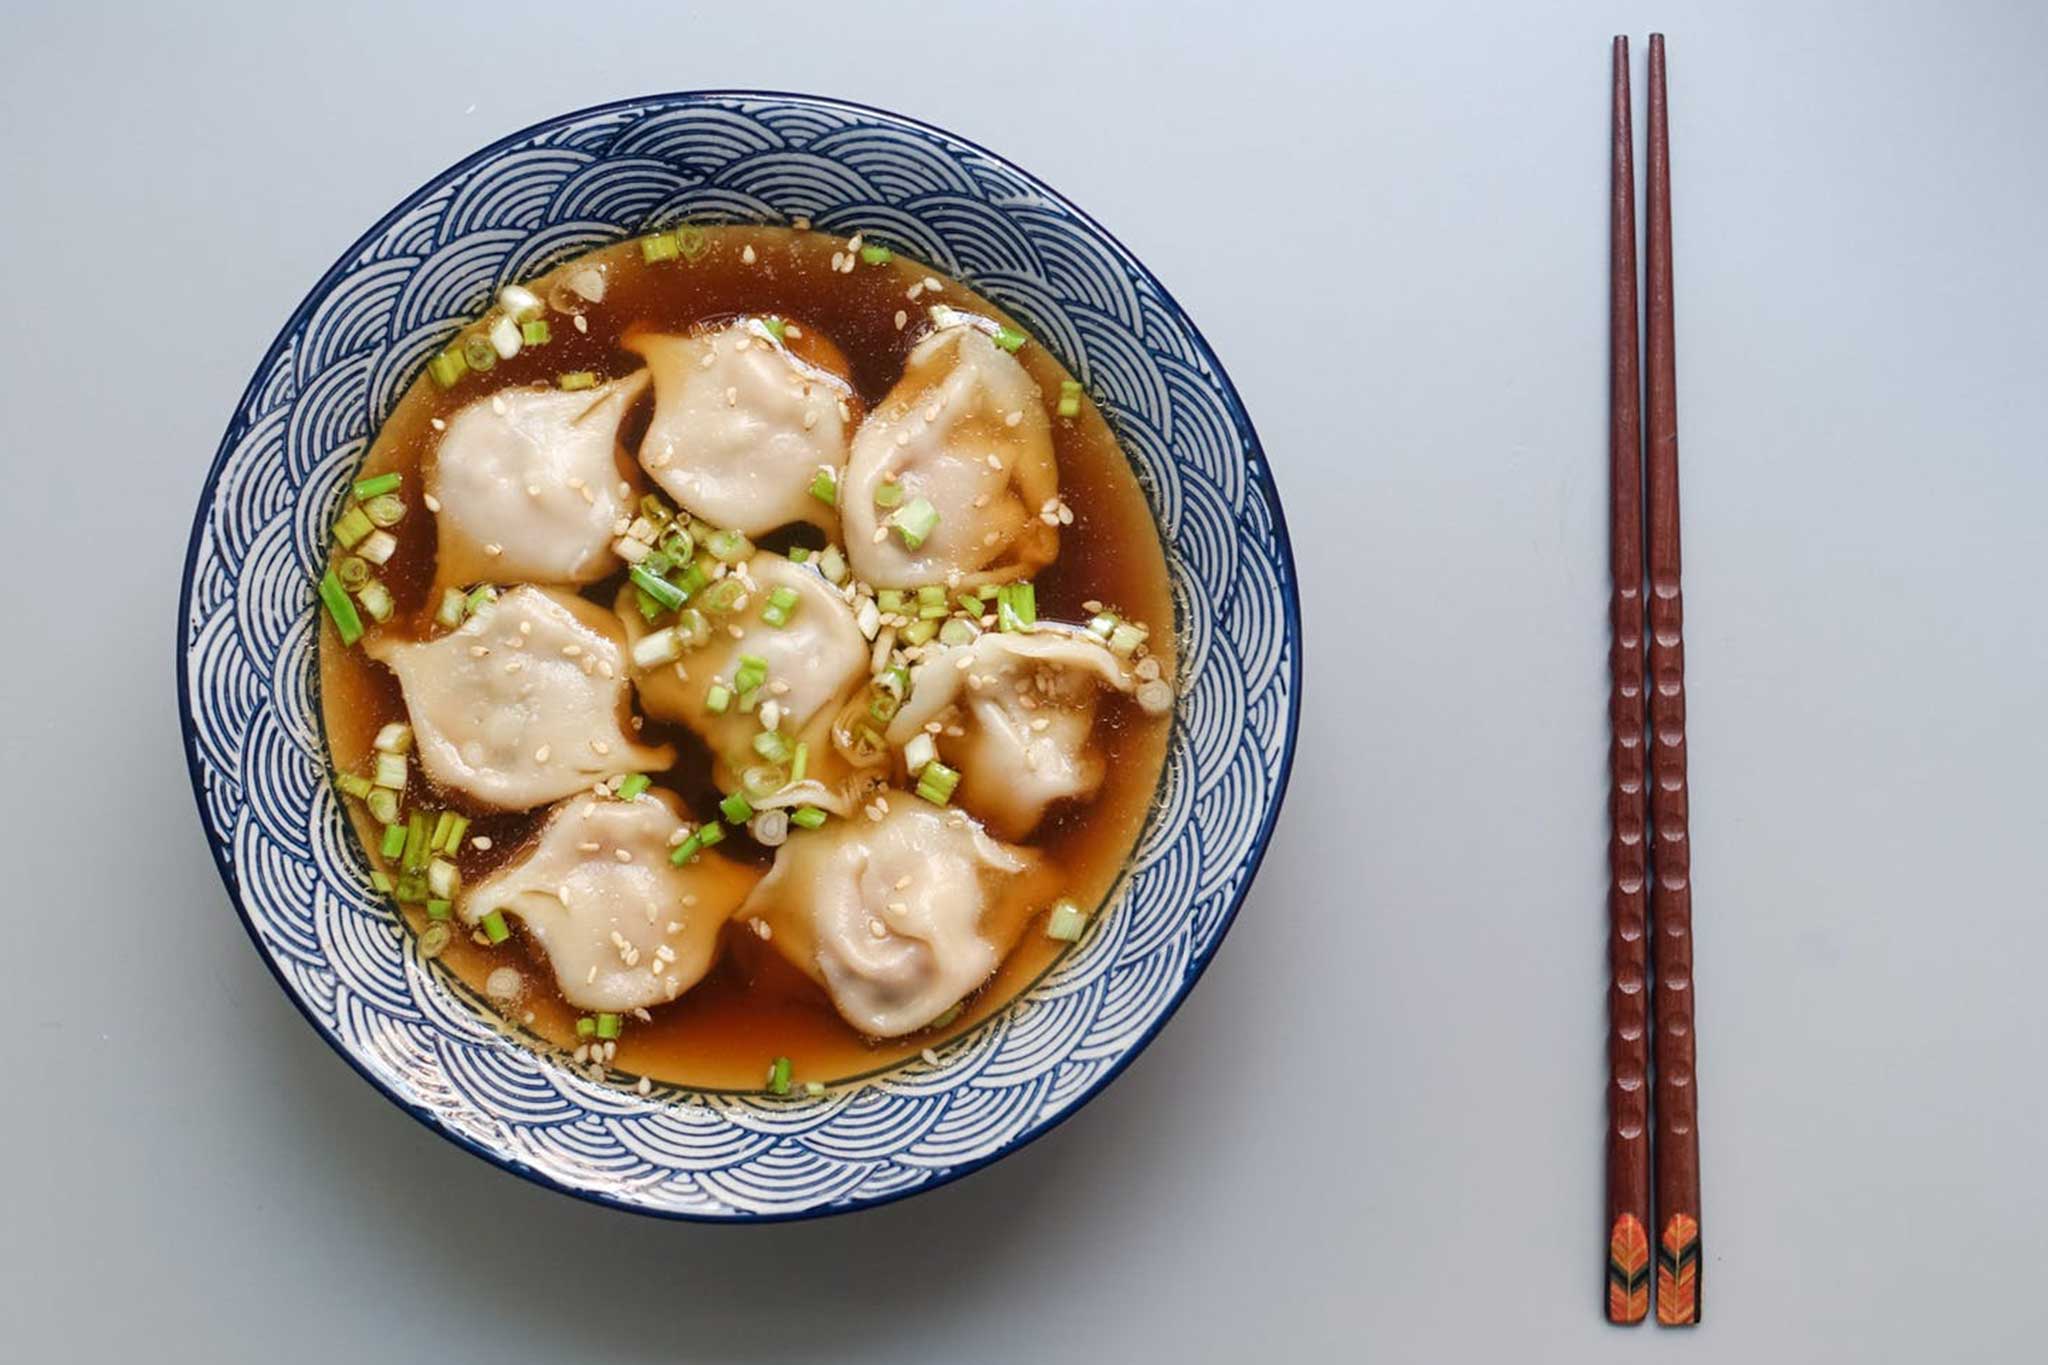 Dumpling soup in a bowl with chopsticks